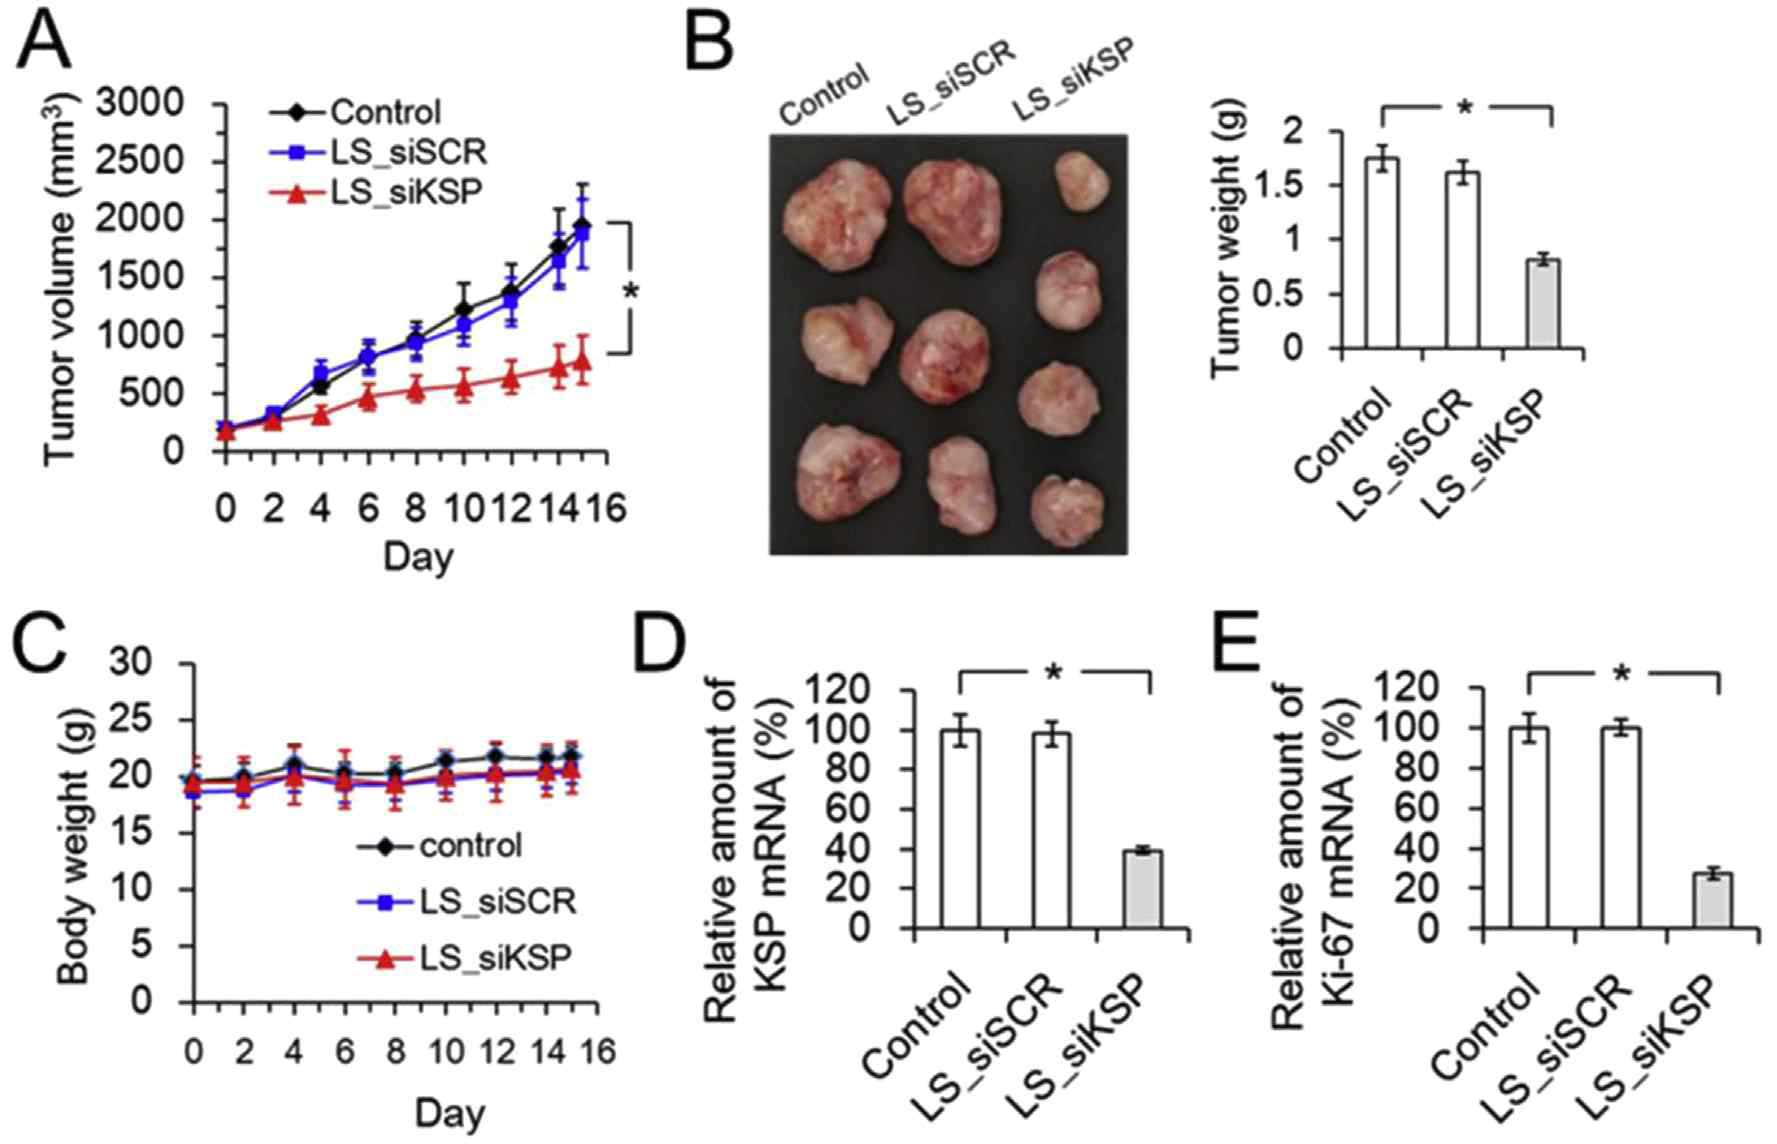 LP_siKSP lipoplexes의 in vivo antitumor effect (A, B), 생체내 무독성을 보여주는 tumor-free ddY mouse에서의 몸무게 무변화 (C), 절제된 종양조직에서 감소된 KSP mRNA (D) 및 Ki-67 mRNA (E)